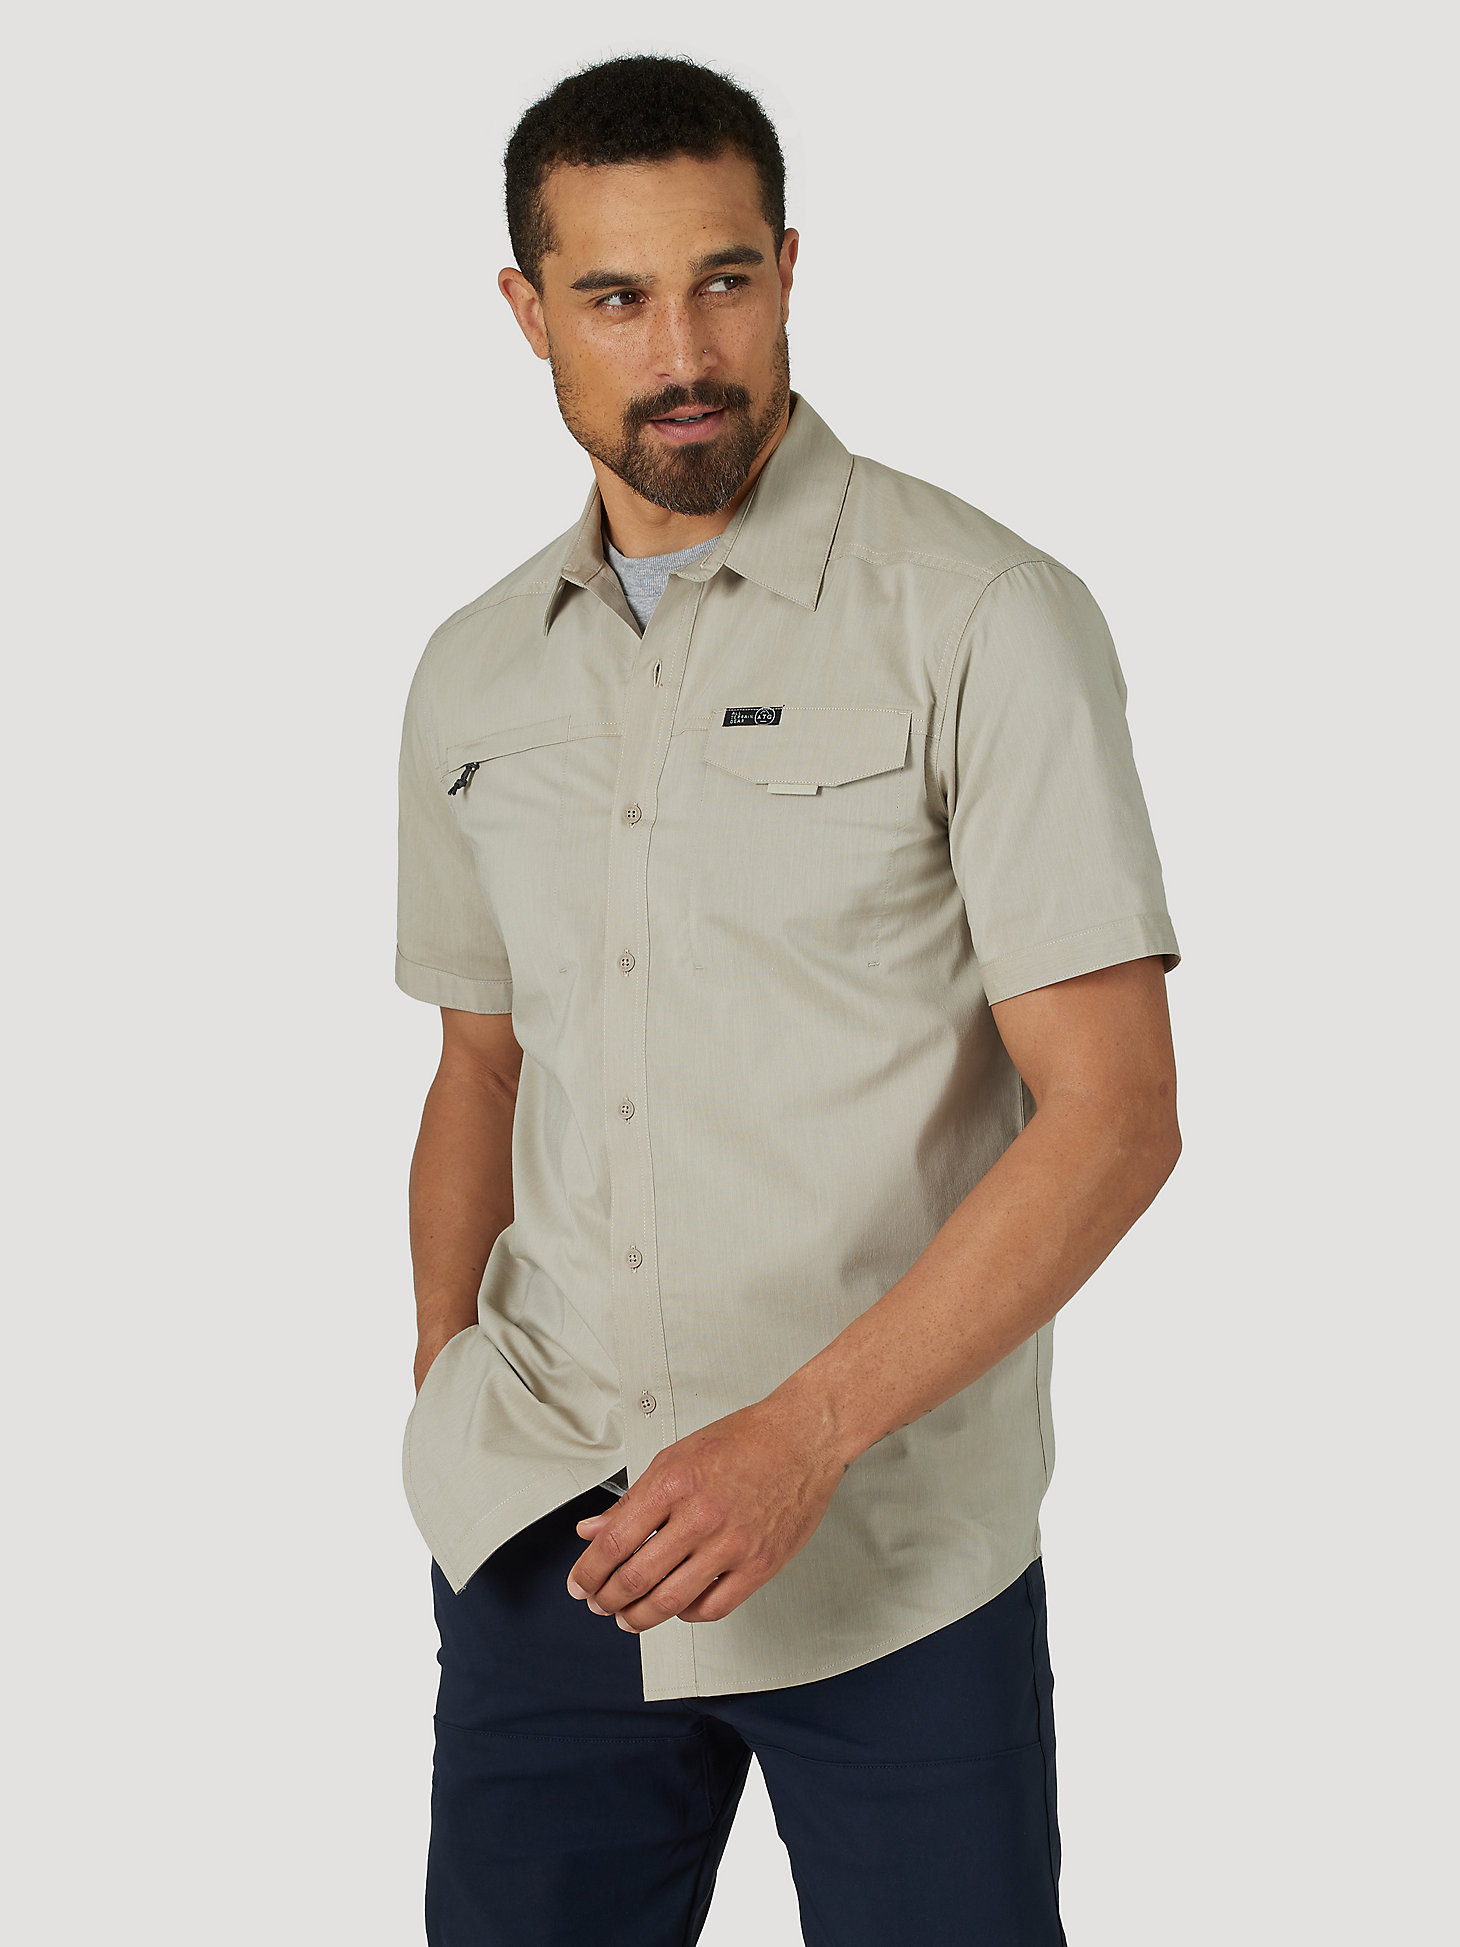 Short Sleeve Zip Pocket Shirt in Aluminum main view